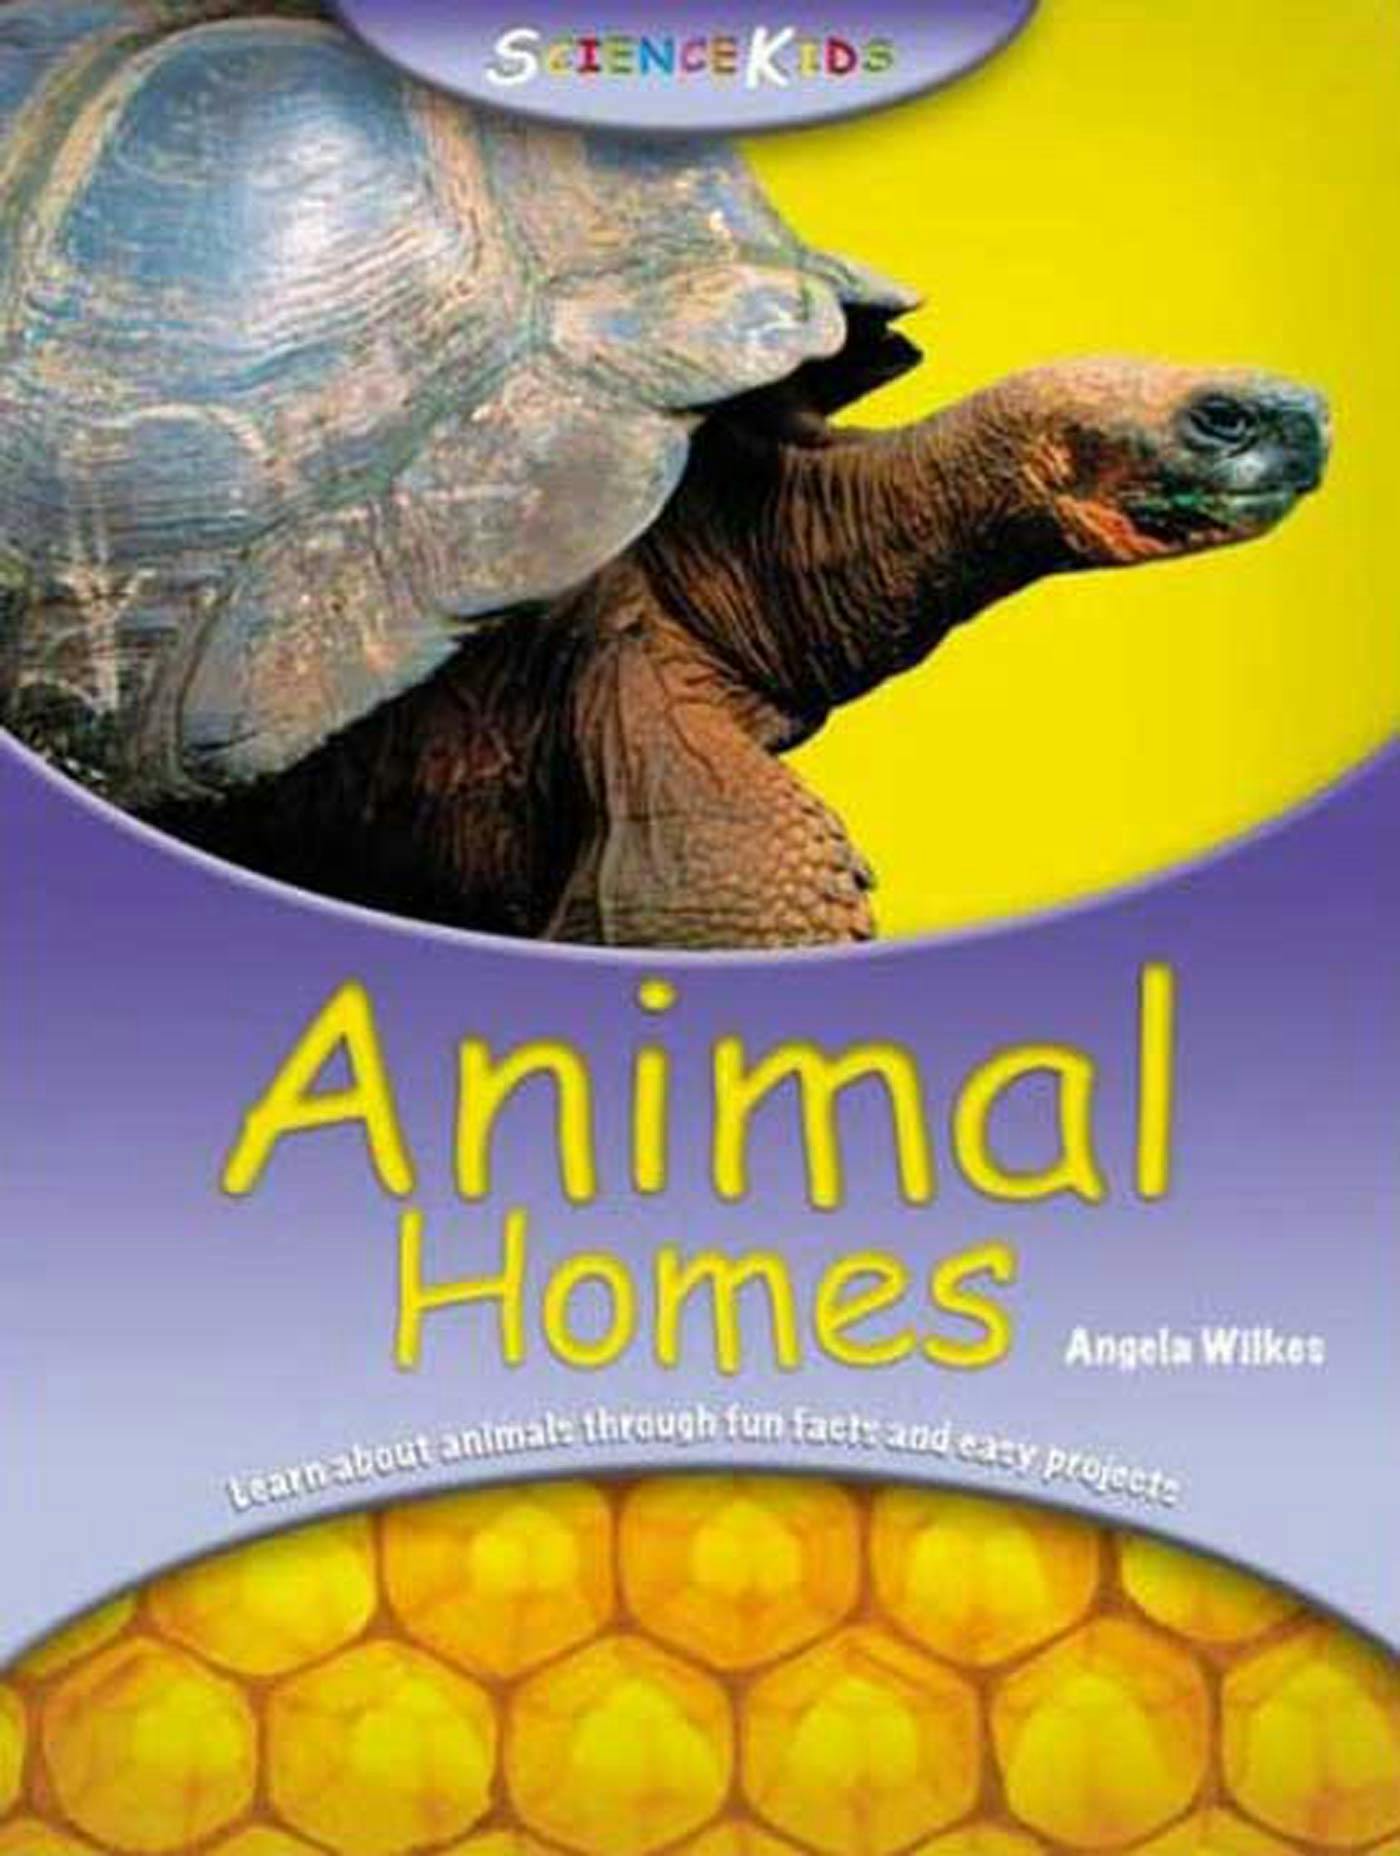 Image of Science Kids Animal Homes